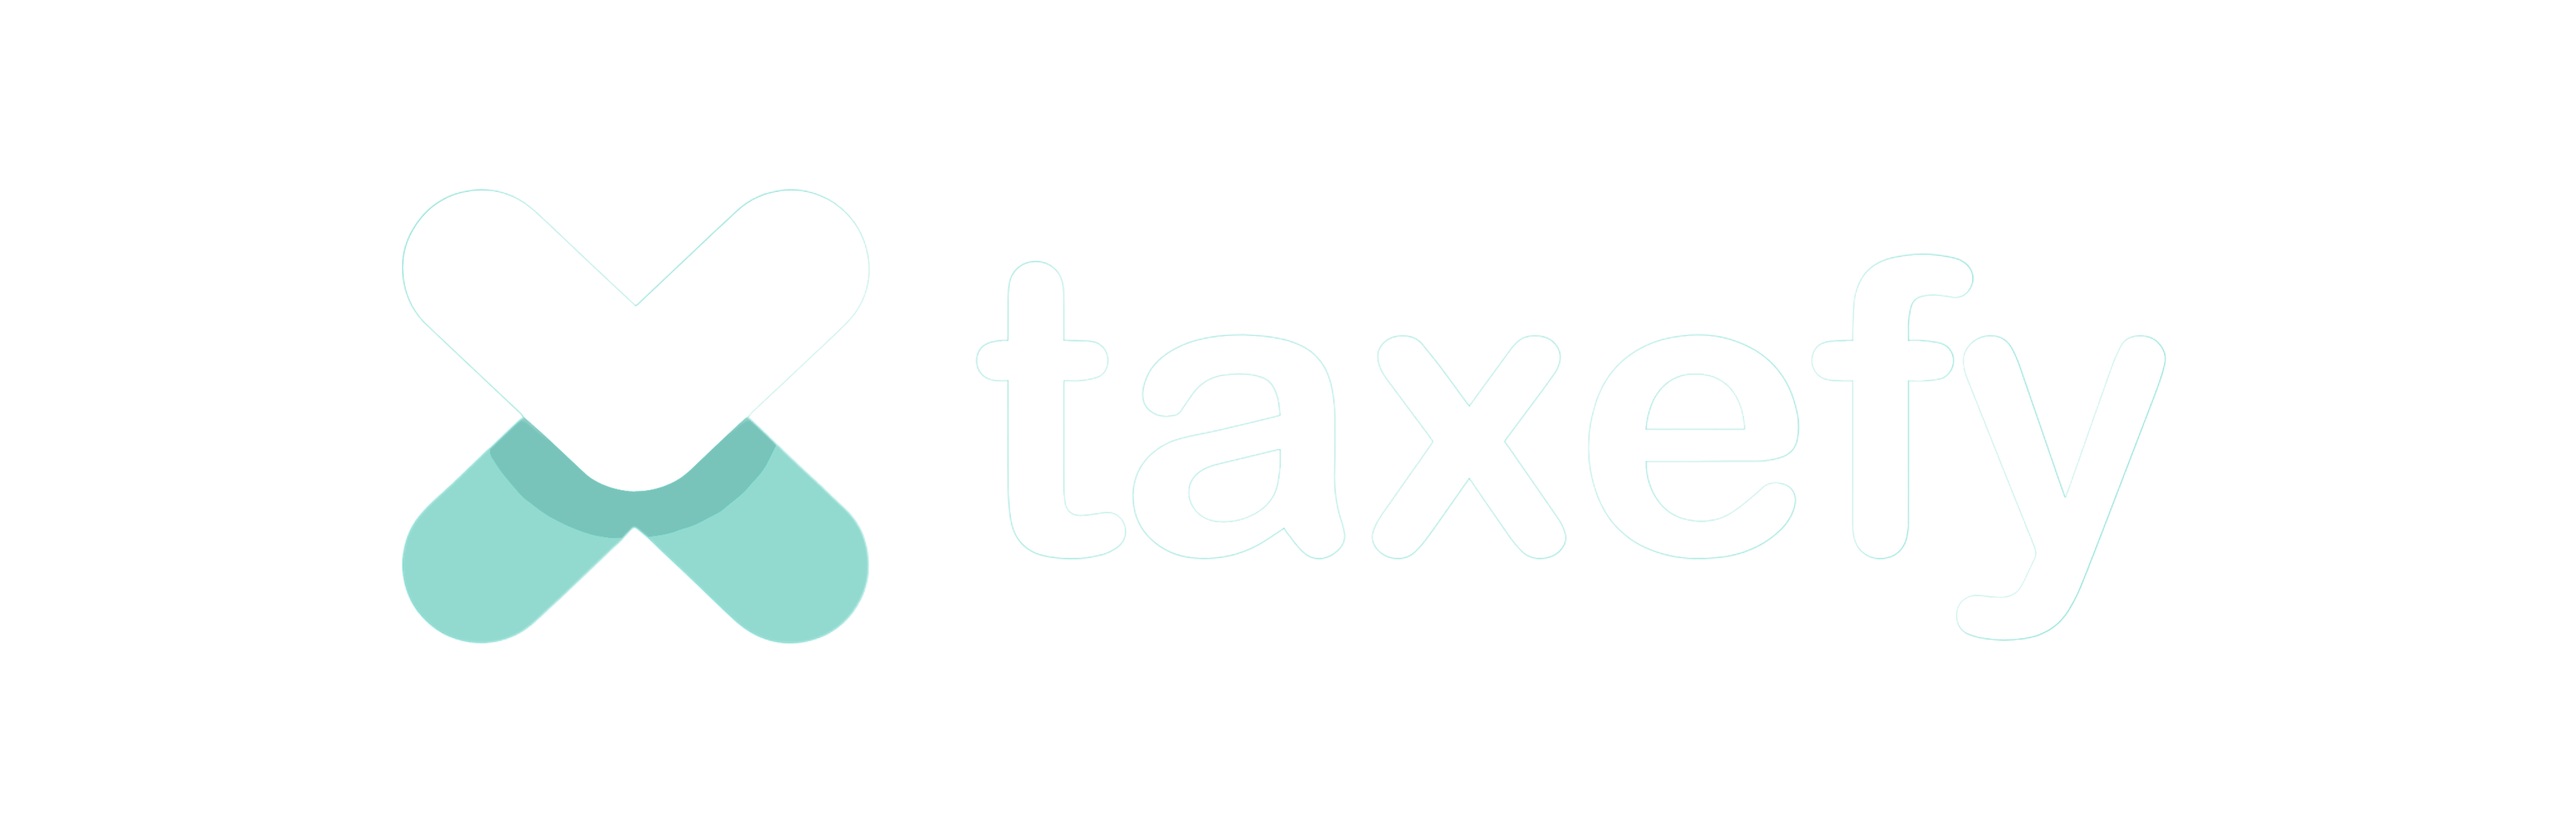 taxefy - tax pretty simple